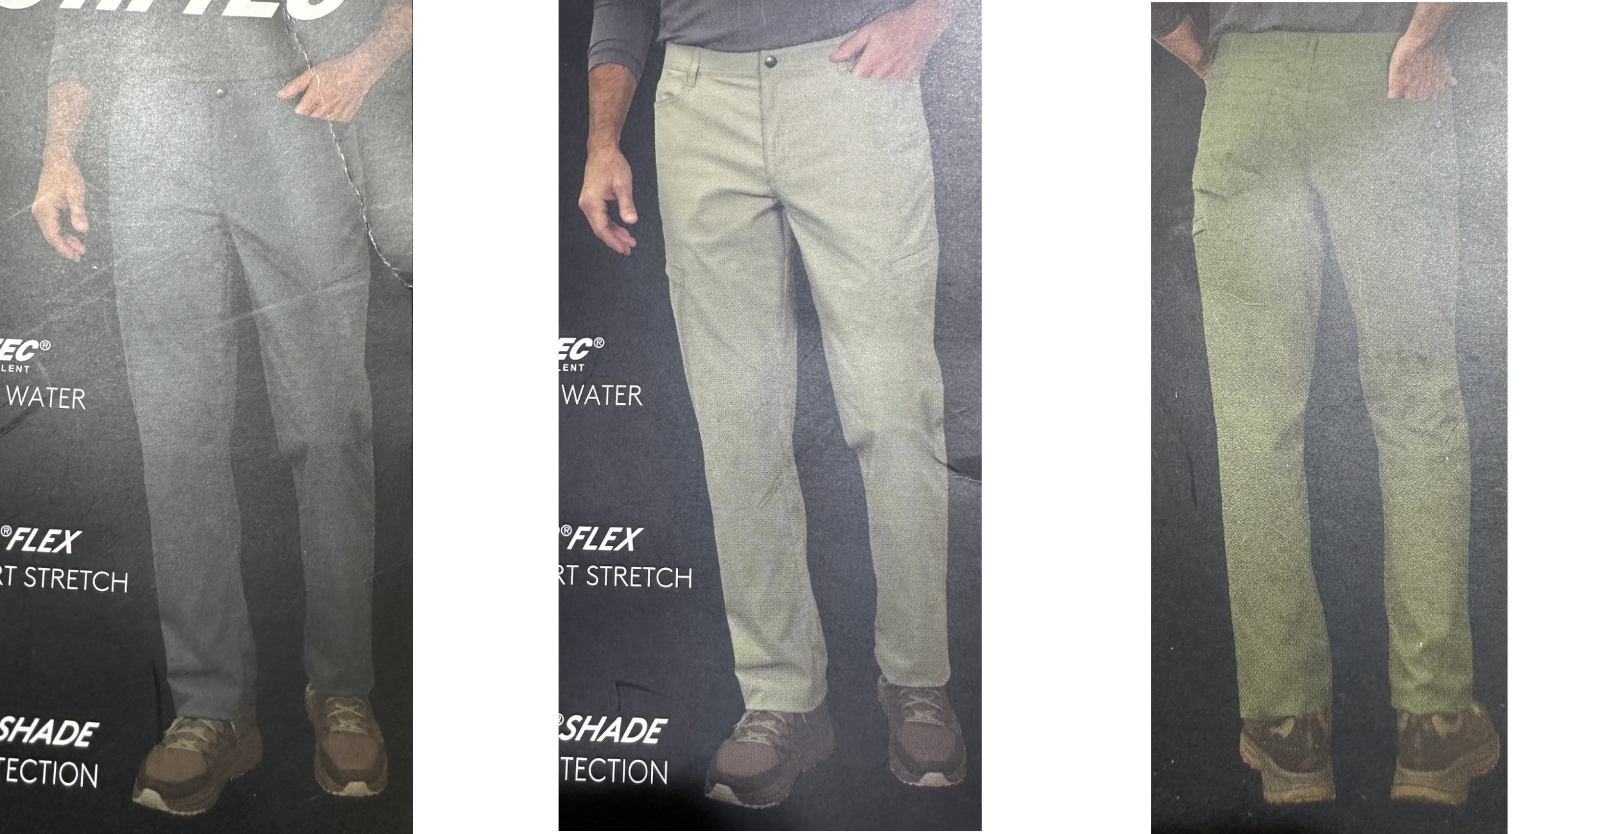 Greg Norman Men's 5 Pocket Pants - Tan  Pocket pants, Clothes design,  Fashion tips